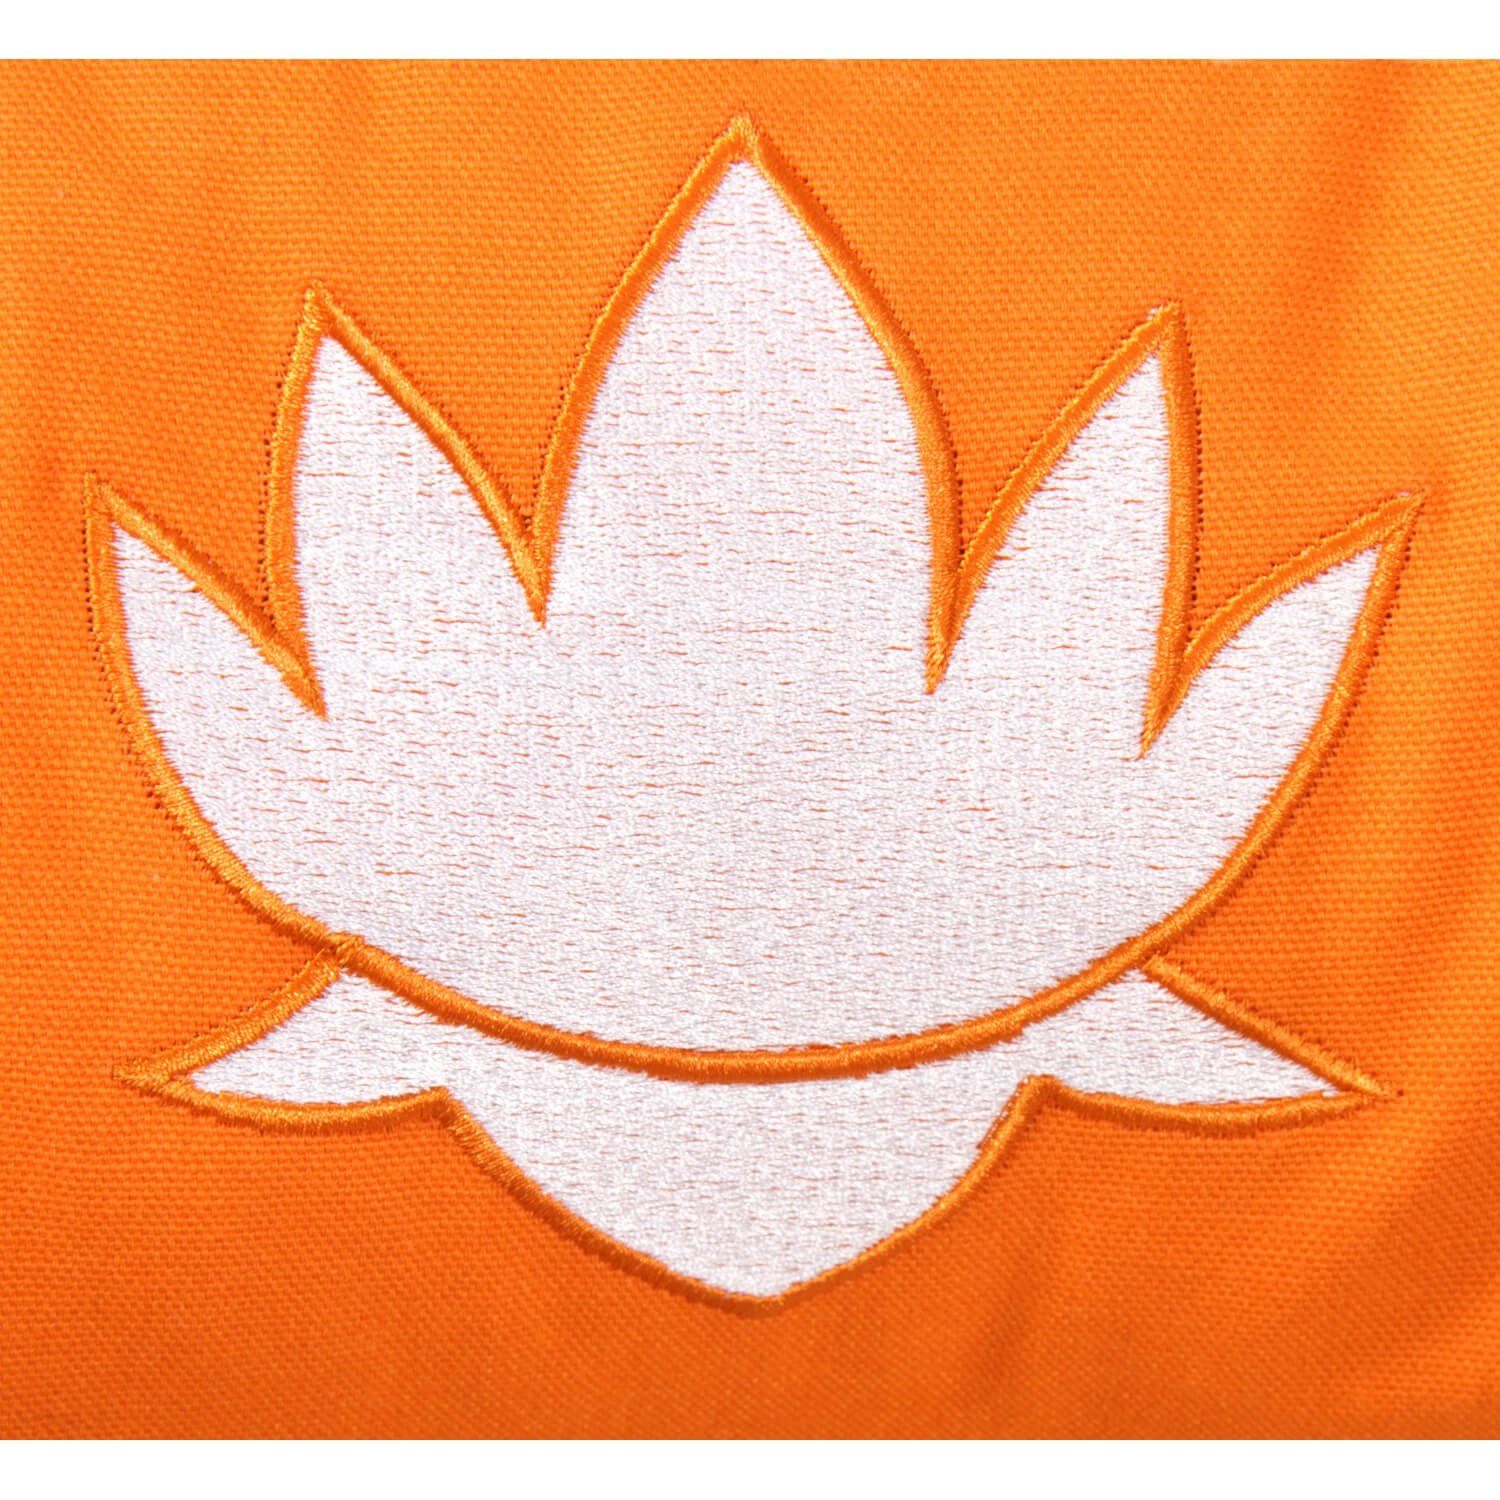 Stick BASIC Halbmond yogabox Yogakissen Lotus orange weiß